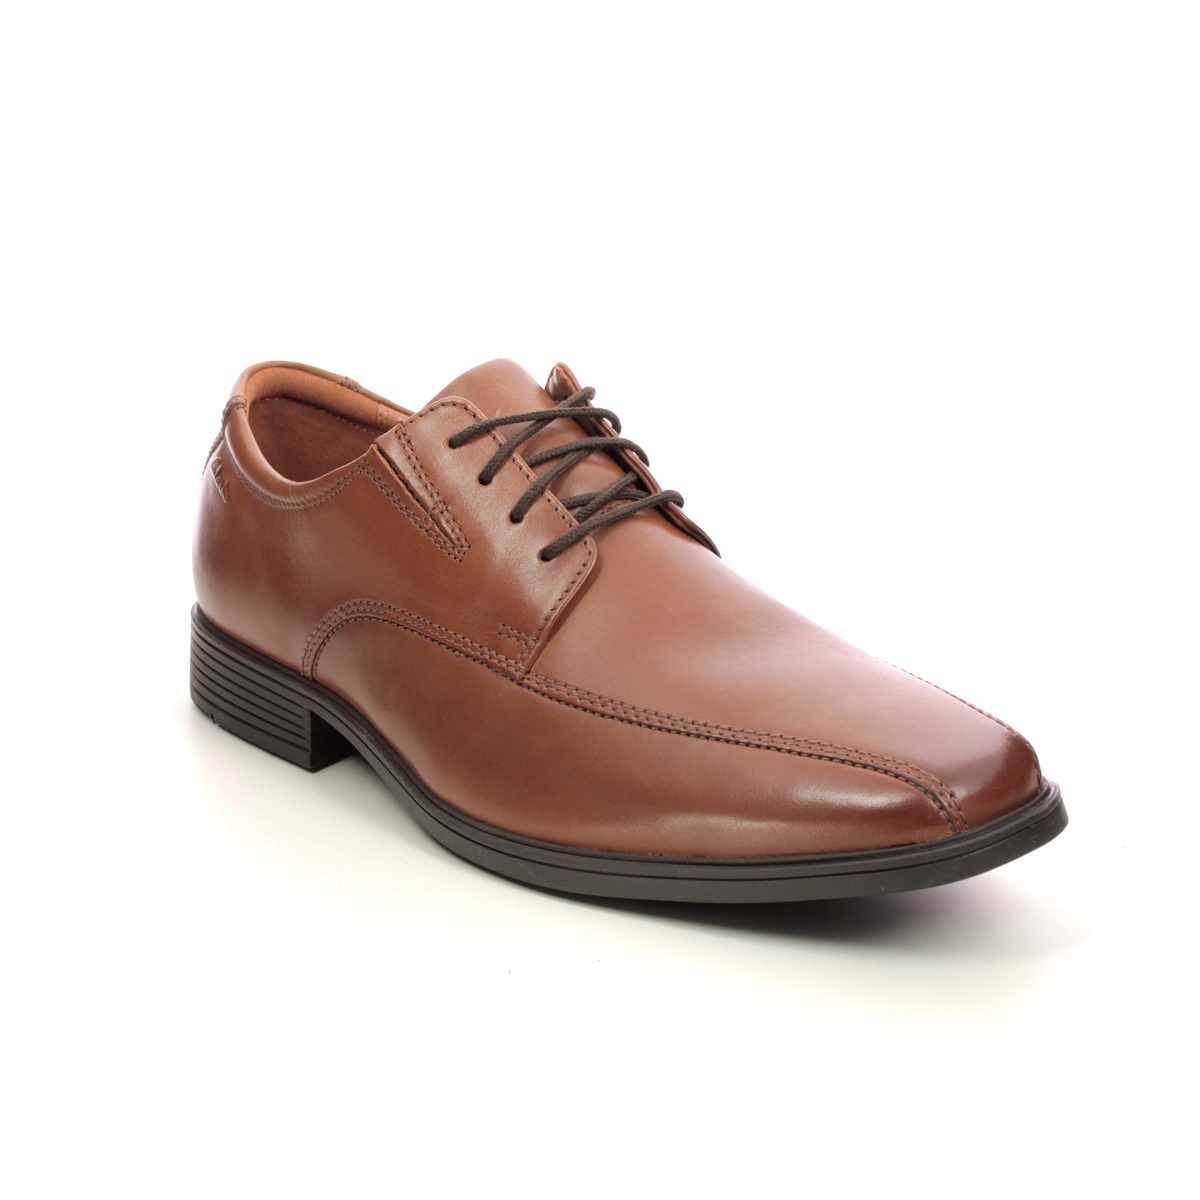 Clarks Tilden Walk Dark Tan Mens Formal Shoes 300958H In Size 7 In Plain Dark Tan H Width Fitting Extra Wide